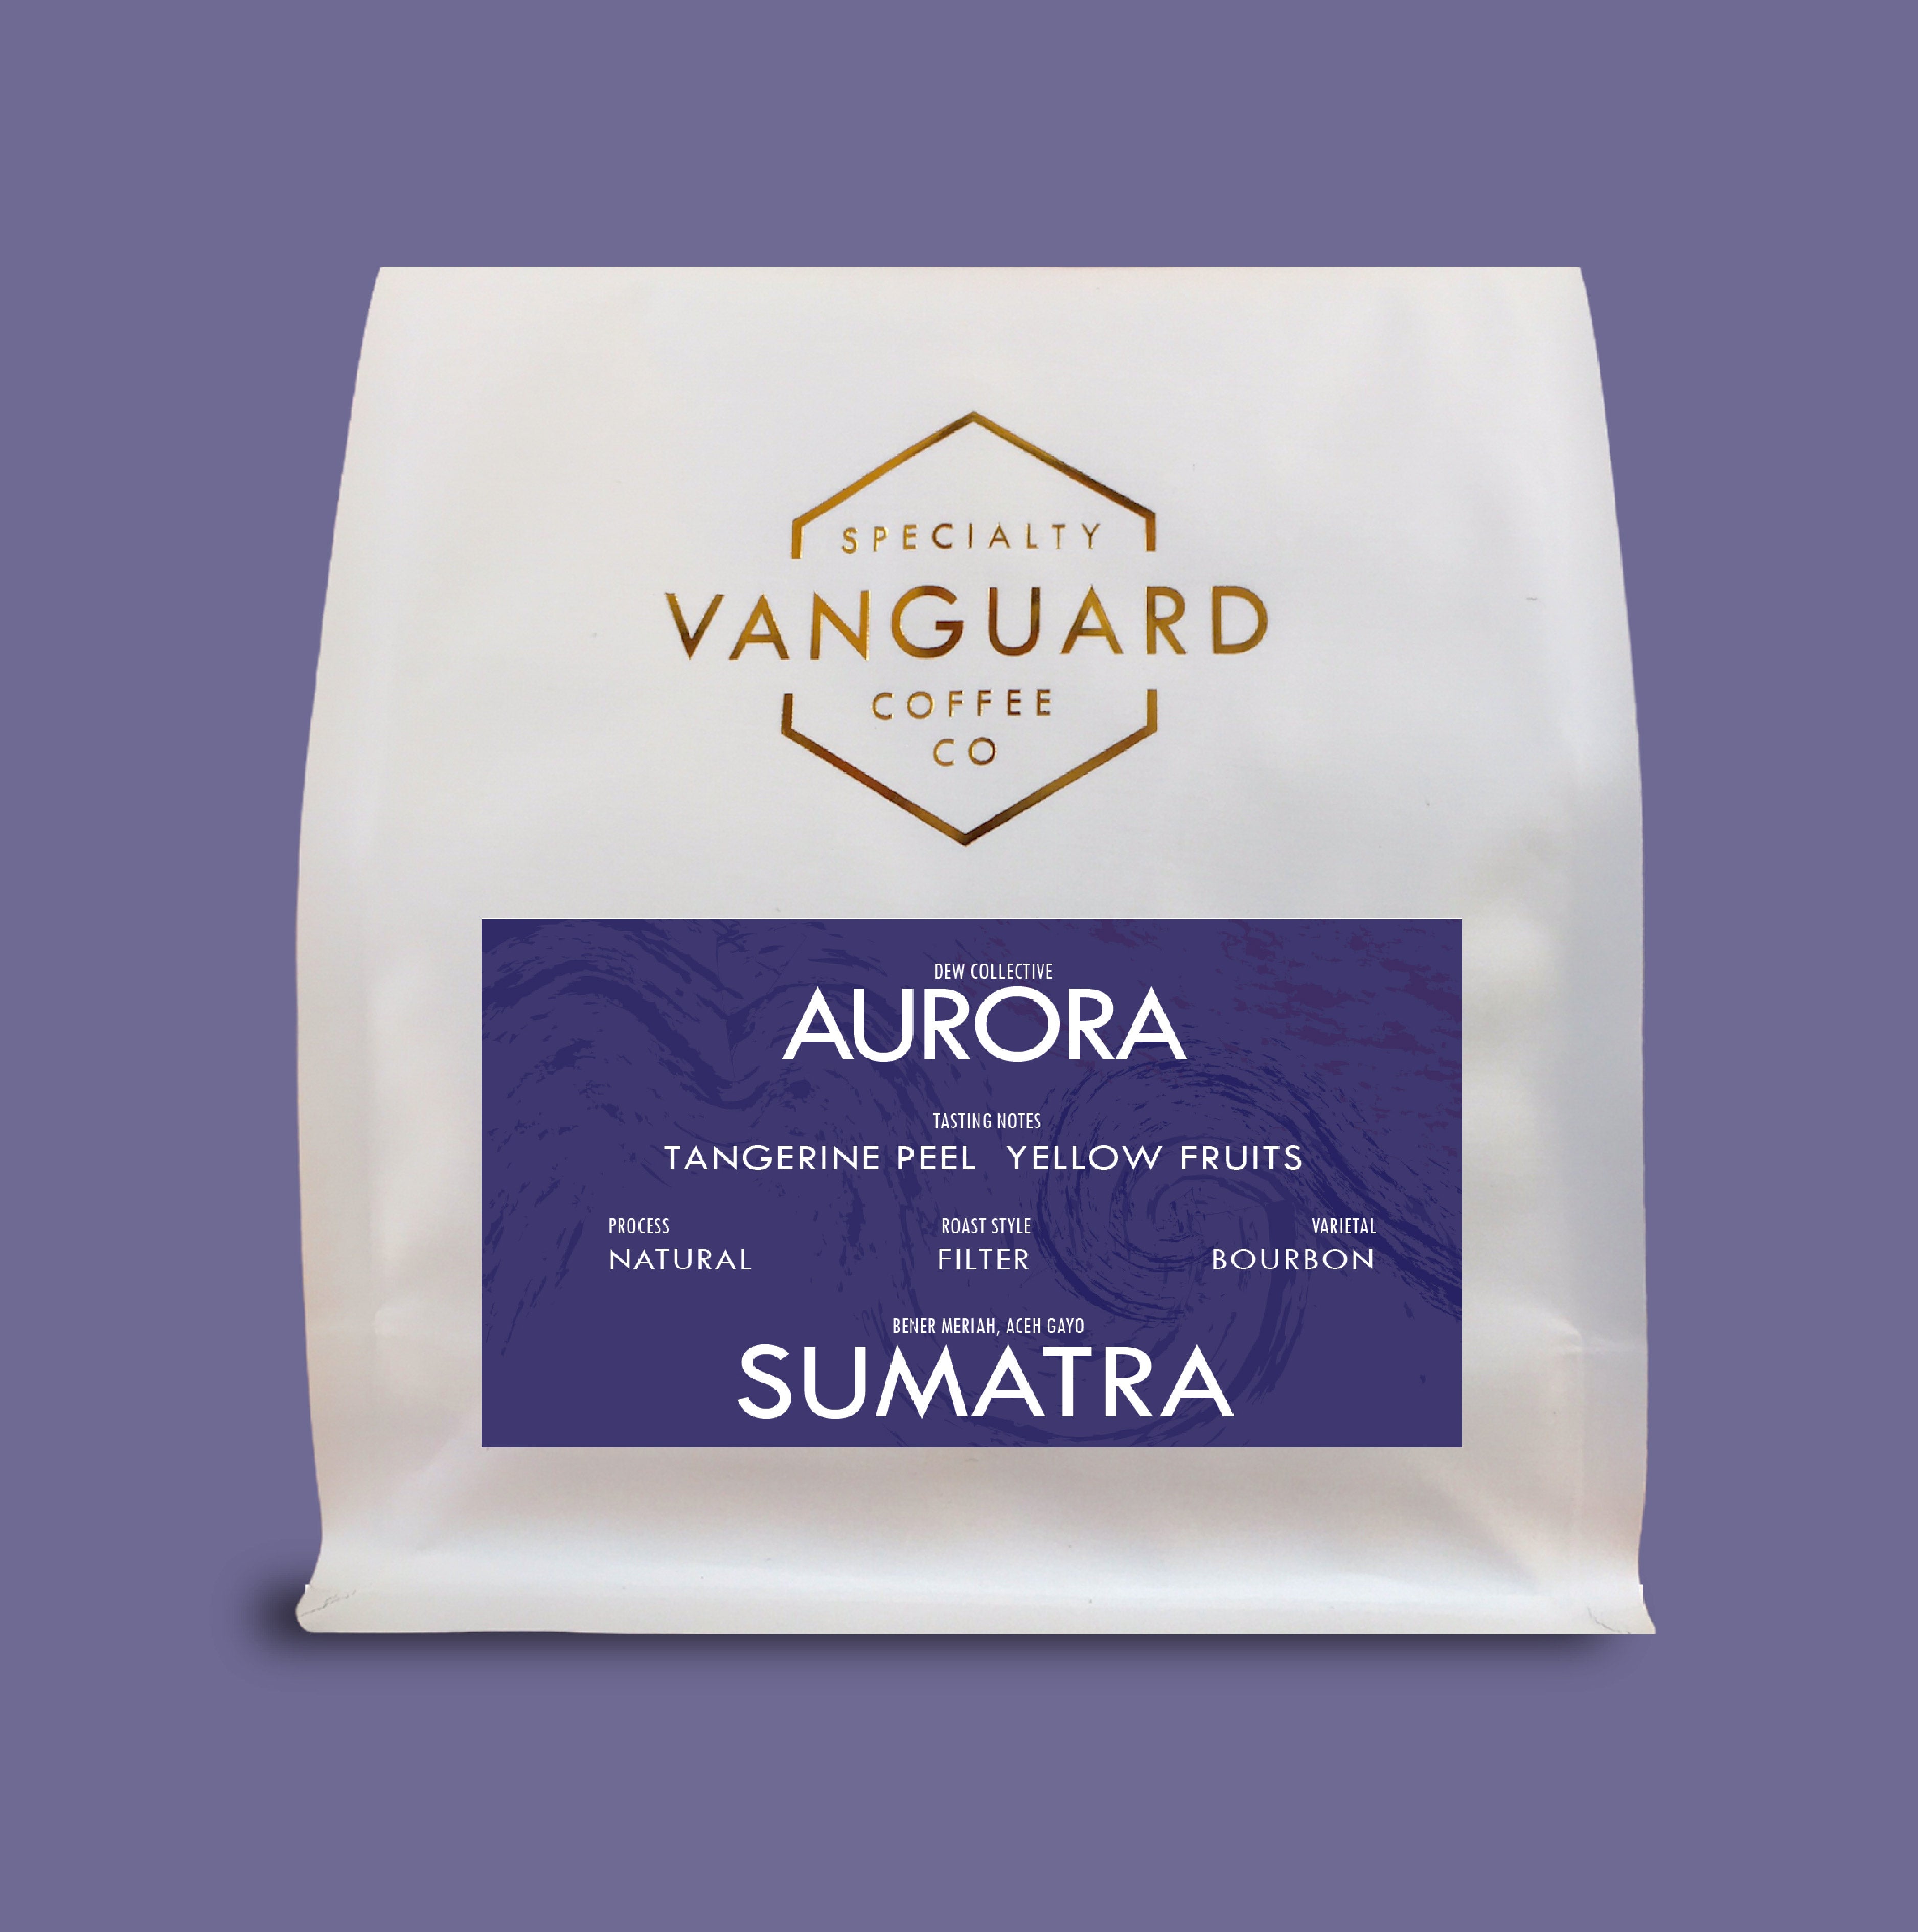 Sumatra Aurora Dew Natural - Filter Roast